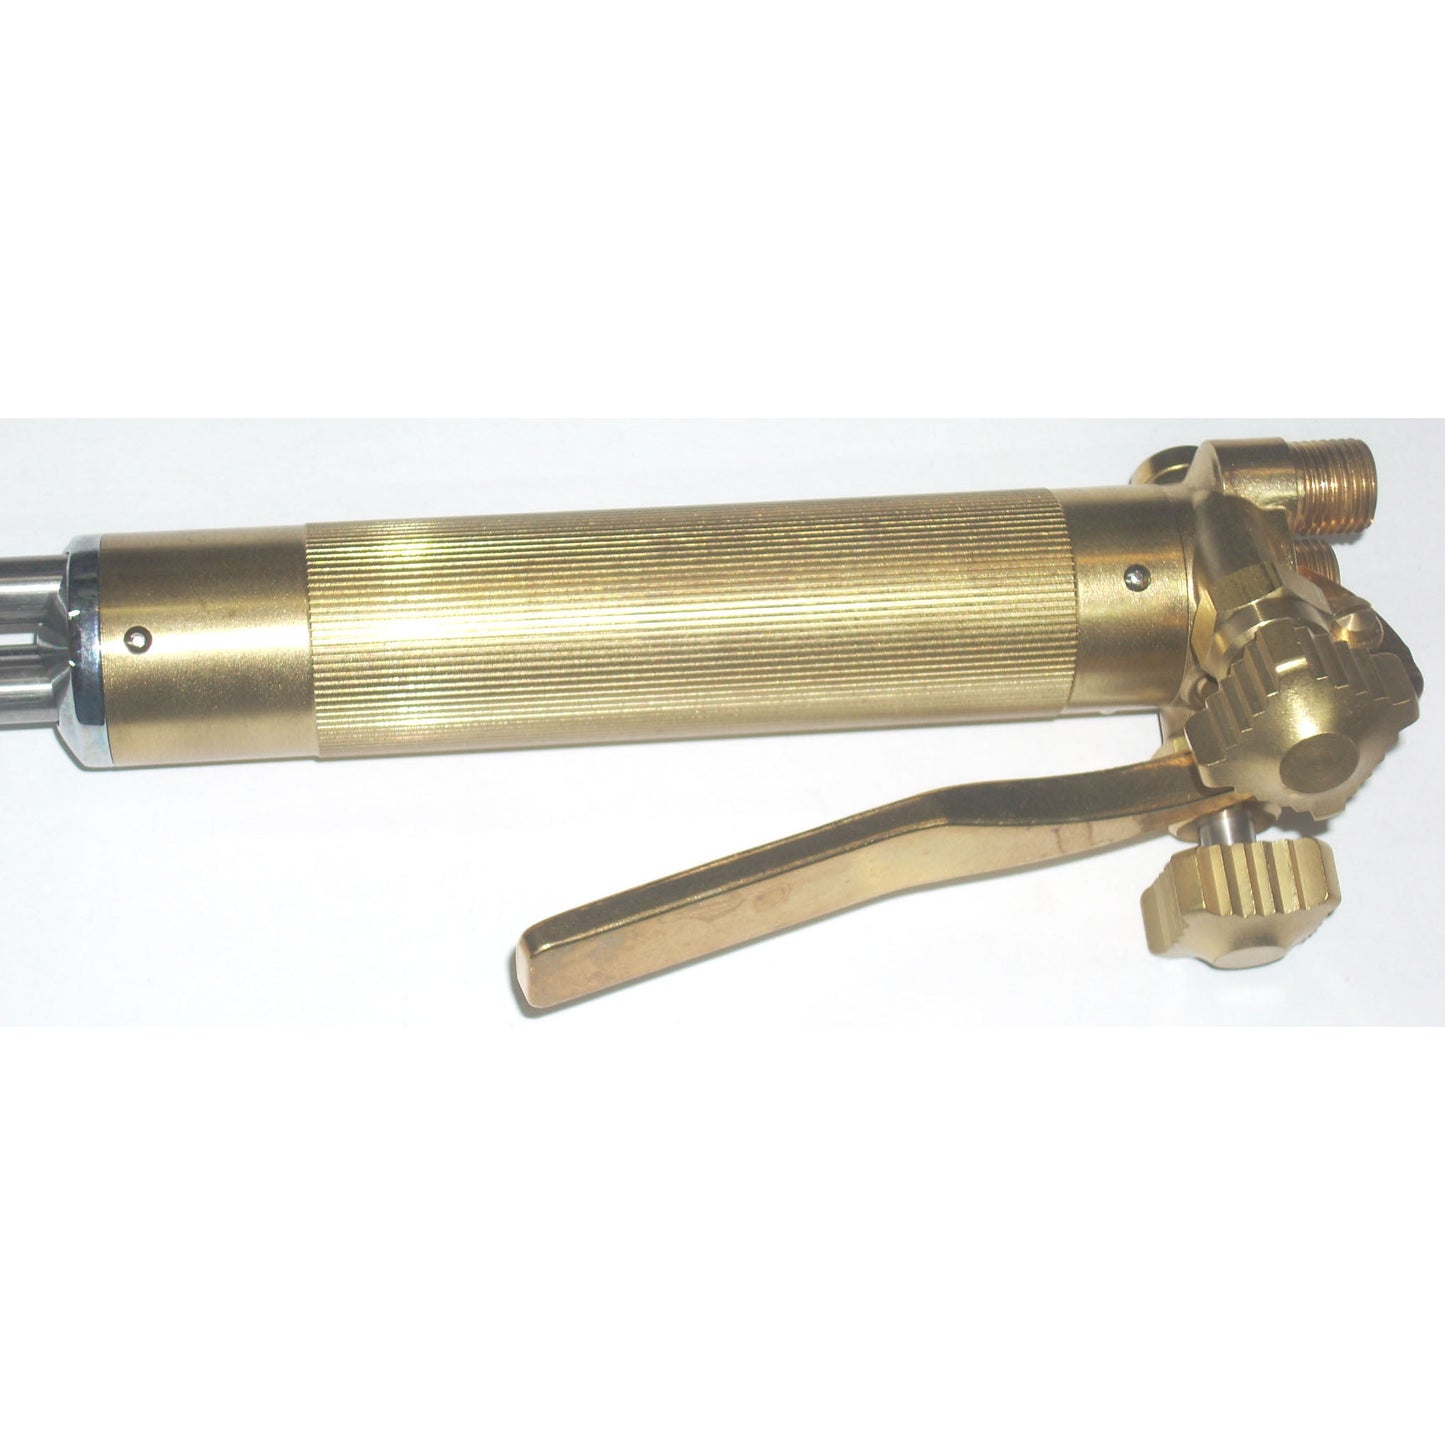 Acetylene torch handle